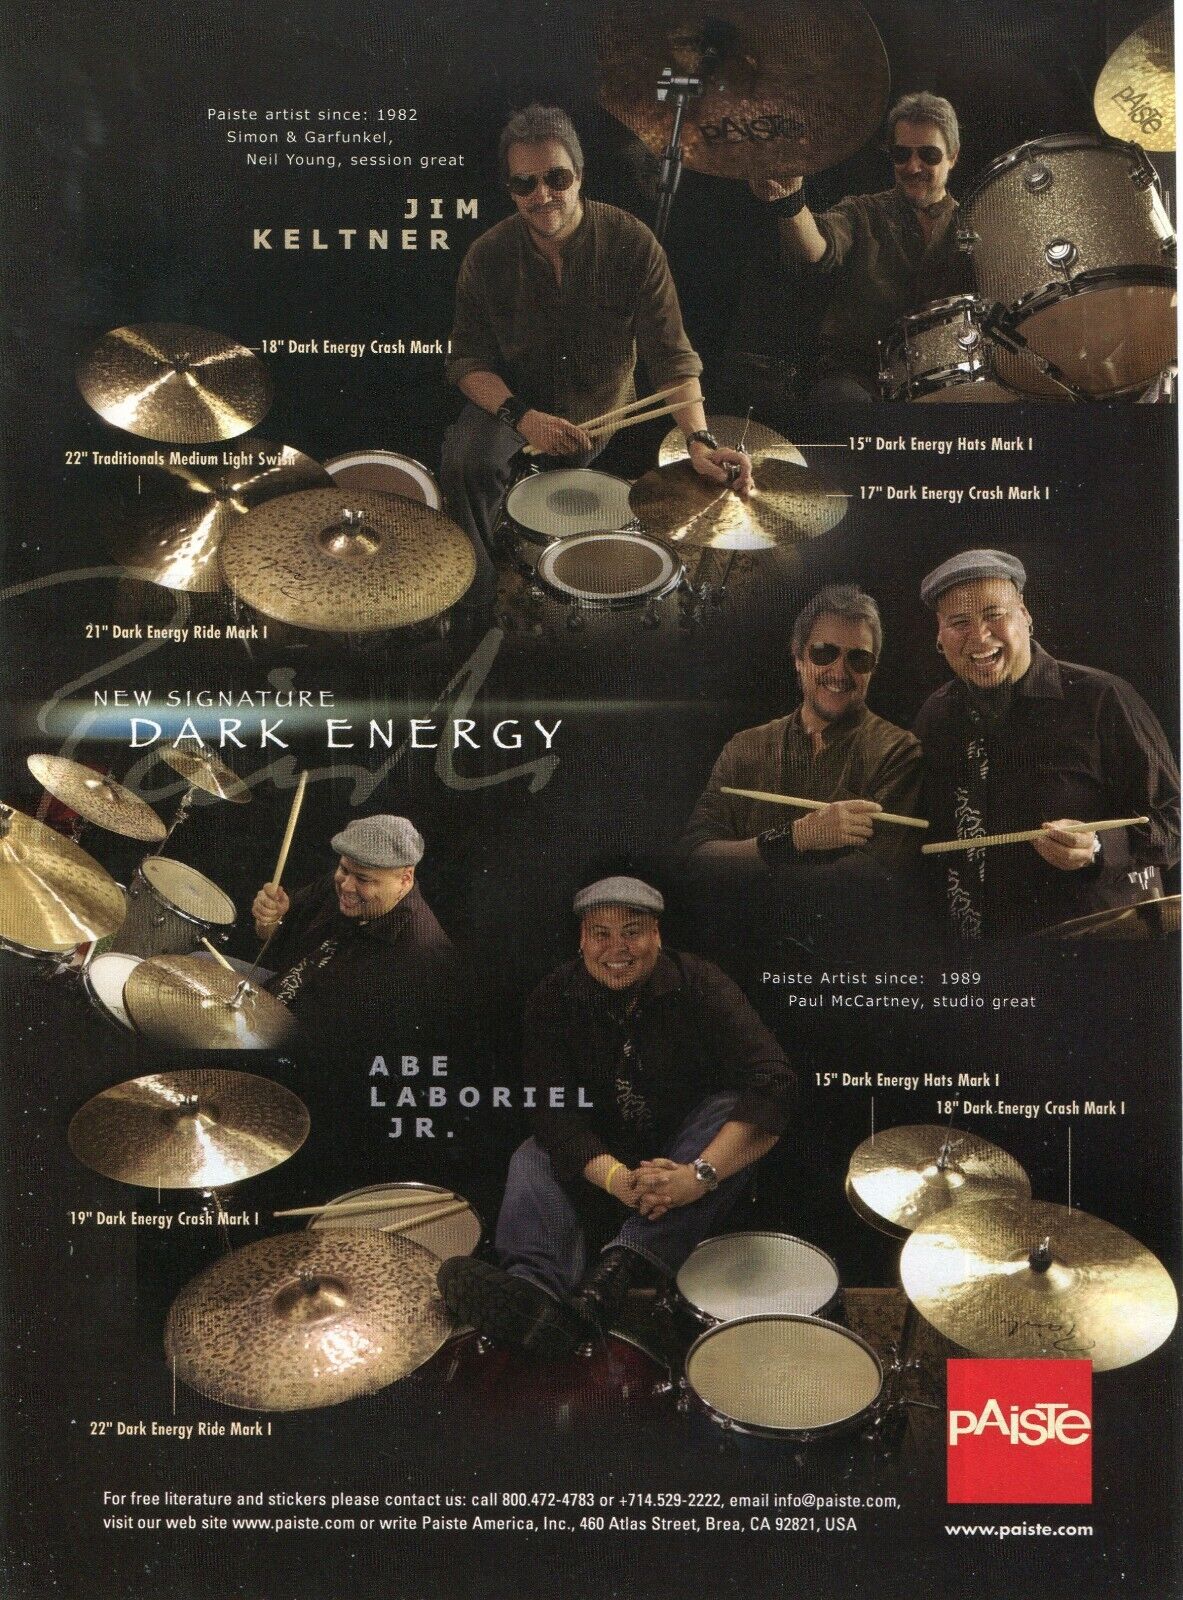 2006 Print Ad of Paiste Dark Energy Drum Cymbals w Jim Keltner & Abe Laboriel Jr